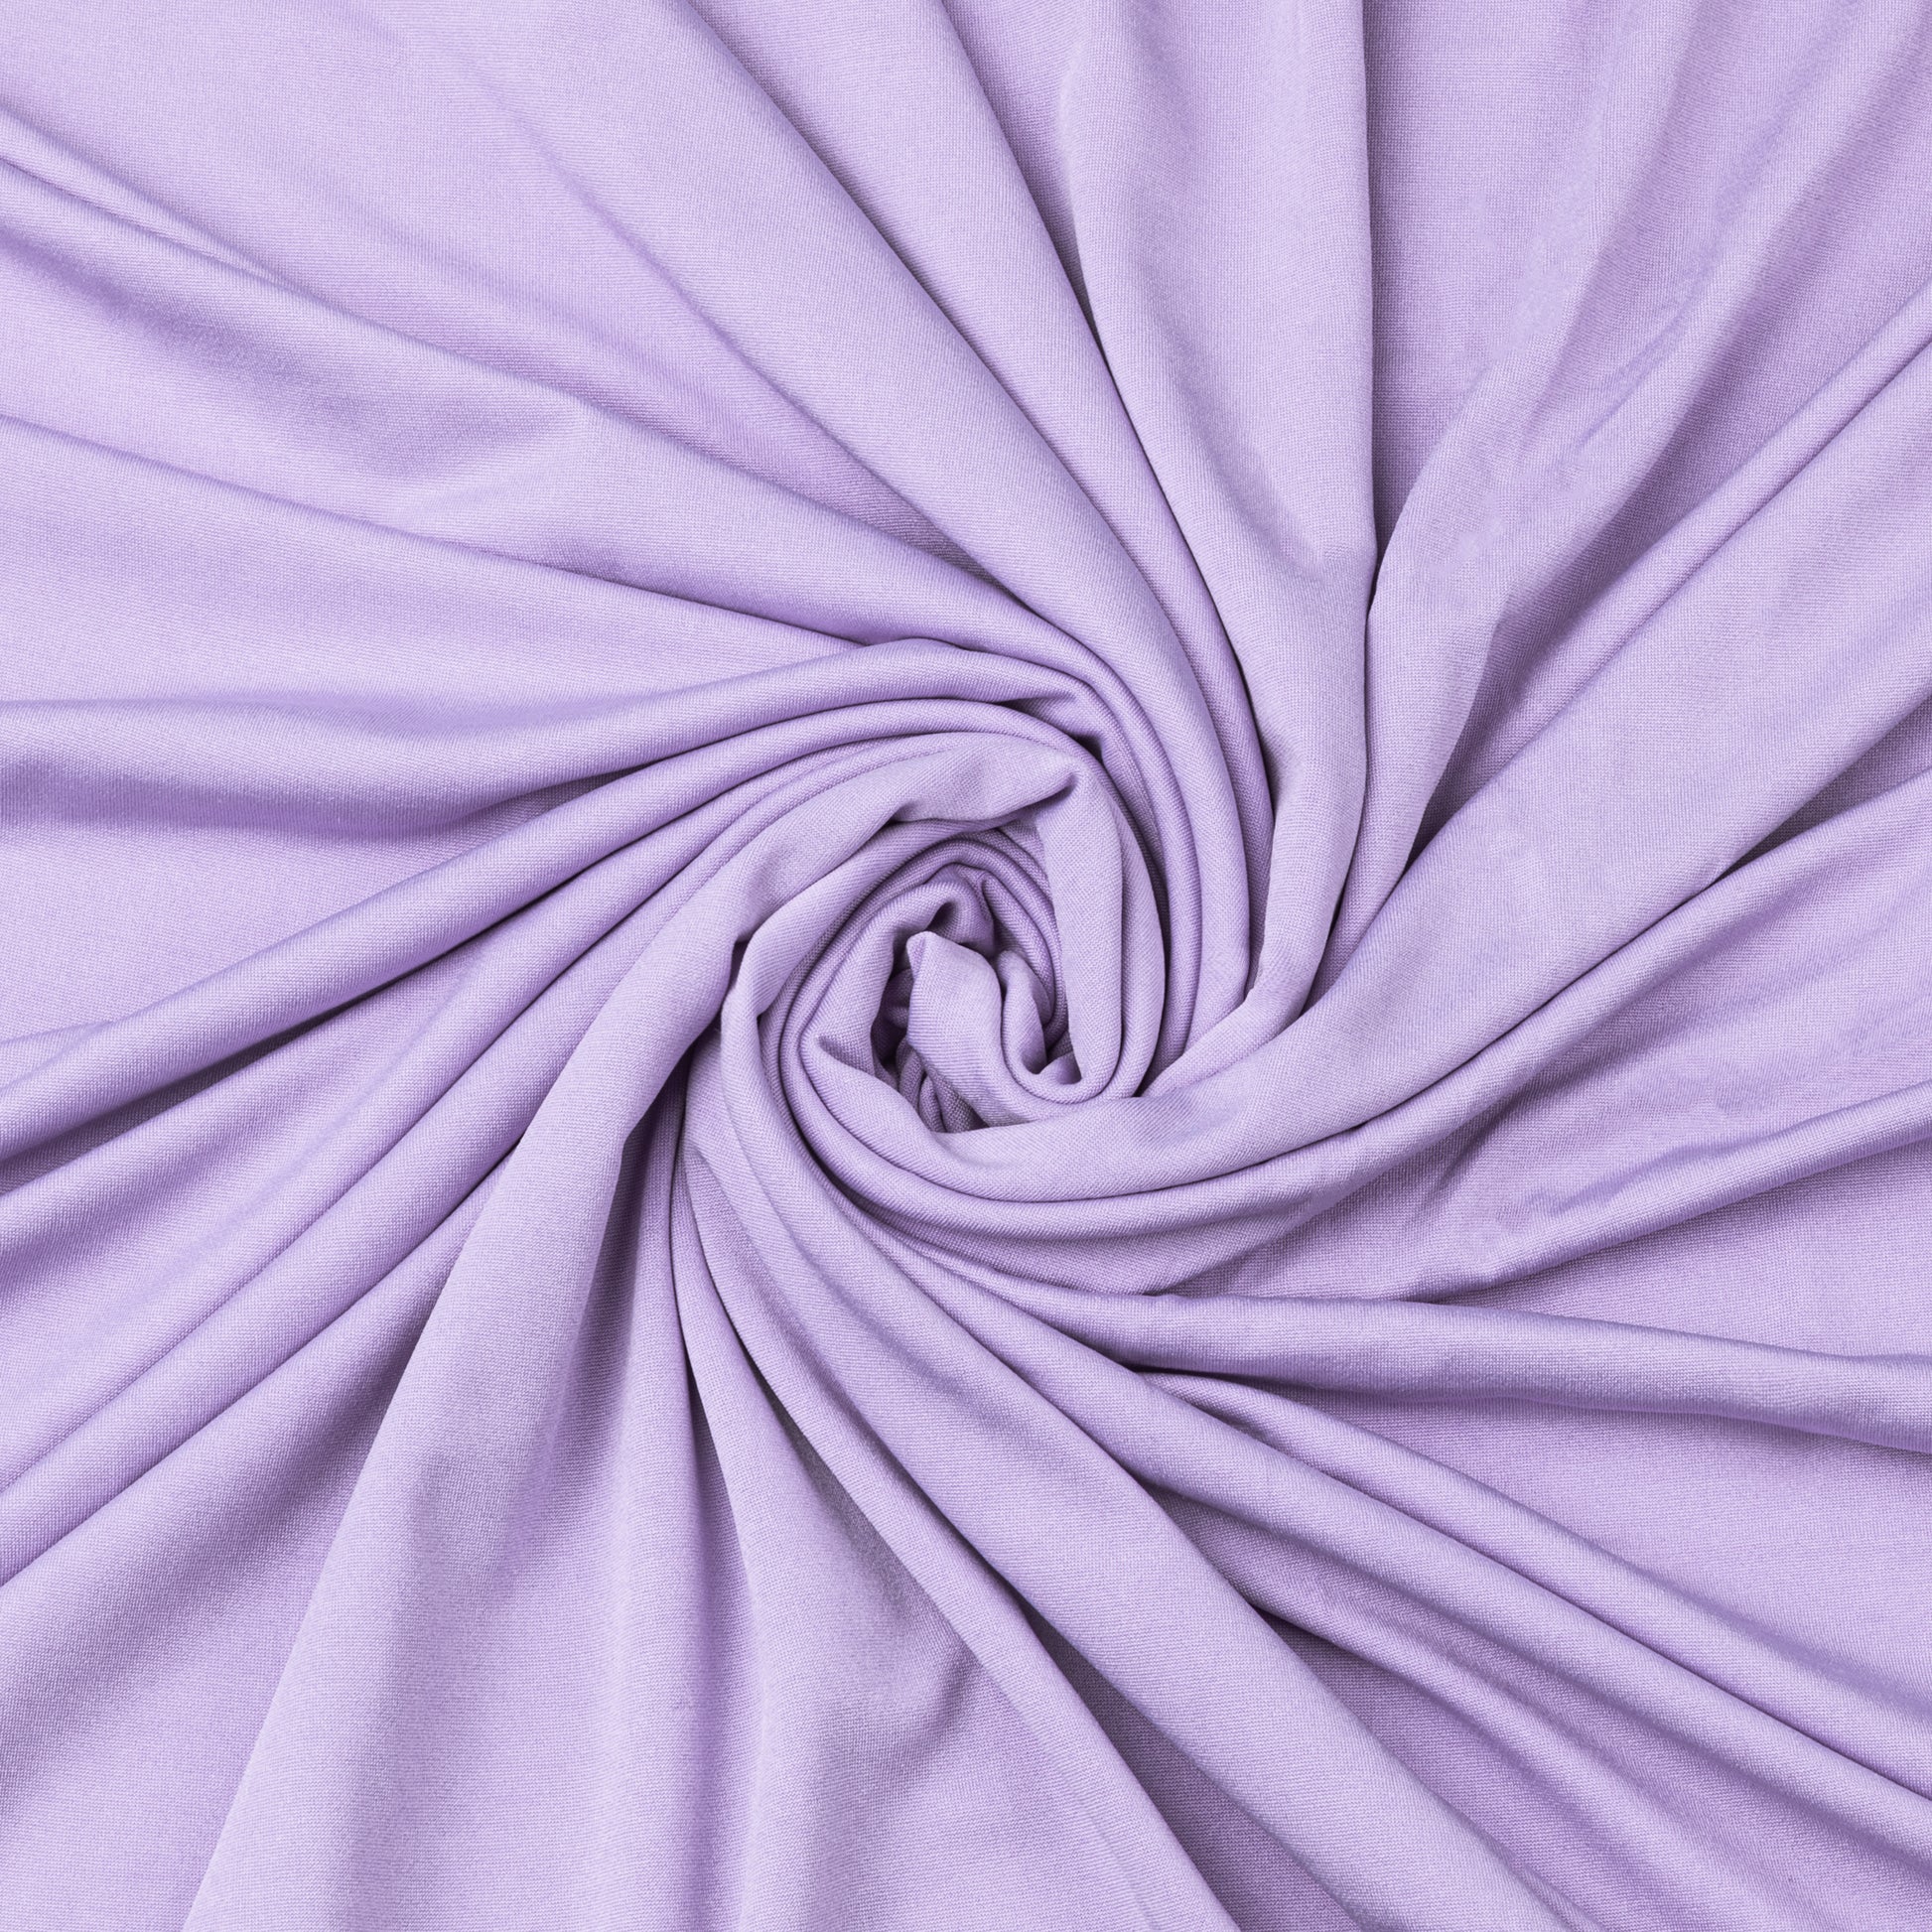 Medium Weight Rayon Spandex Jersey Knit Fabric 180 GSM… (LT-Lavender)